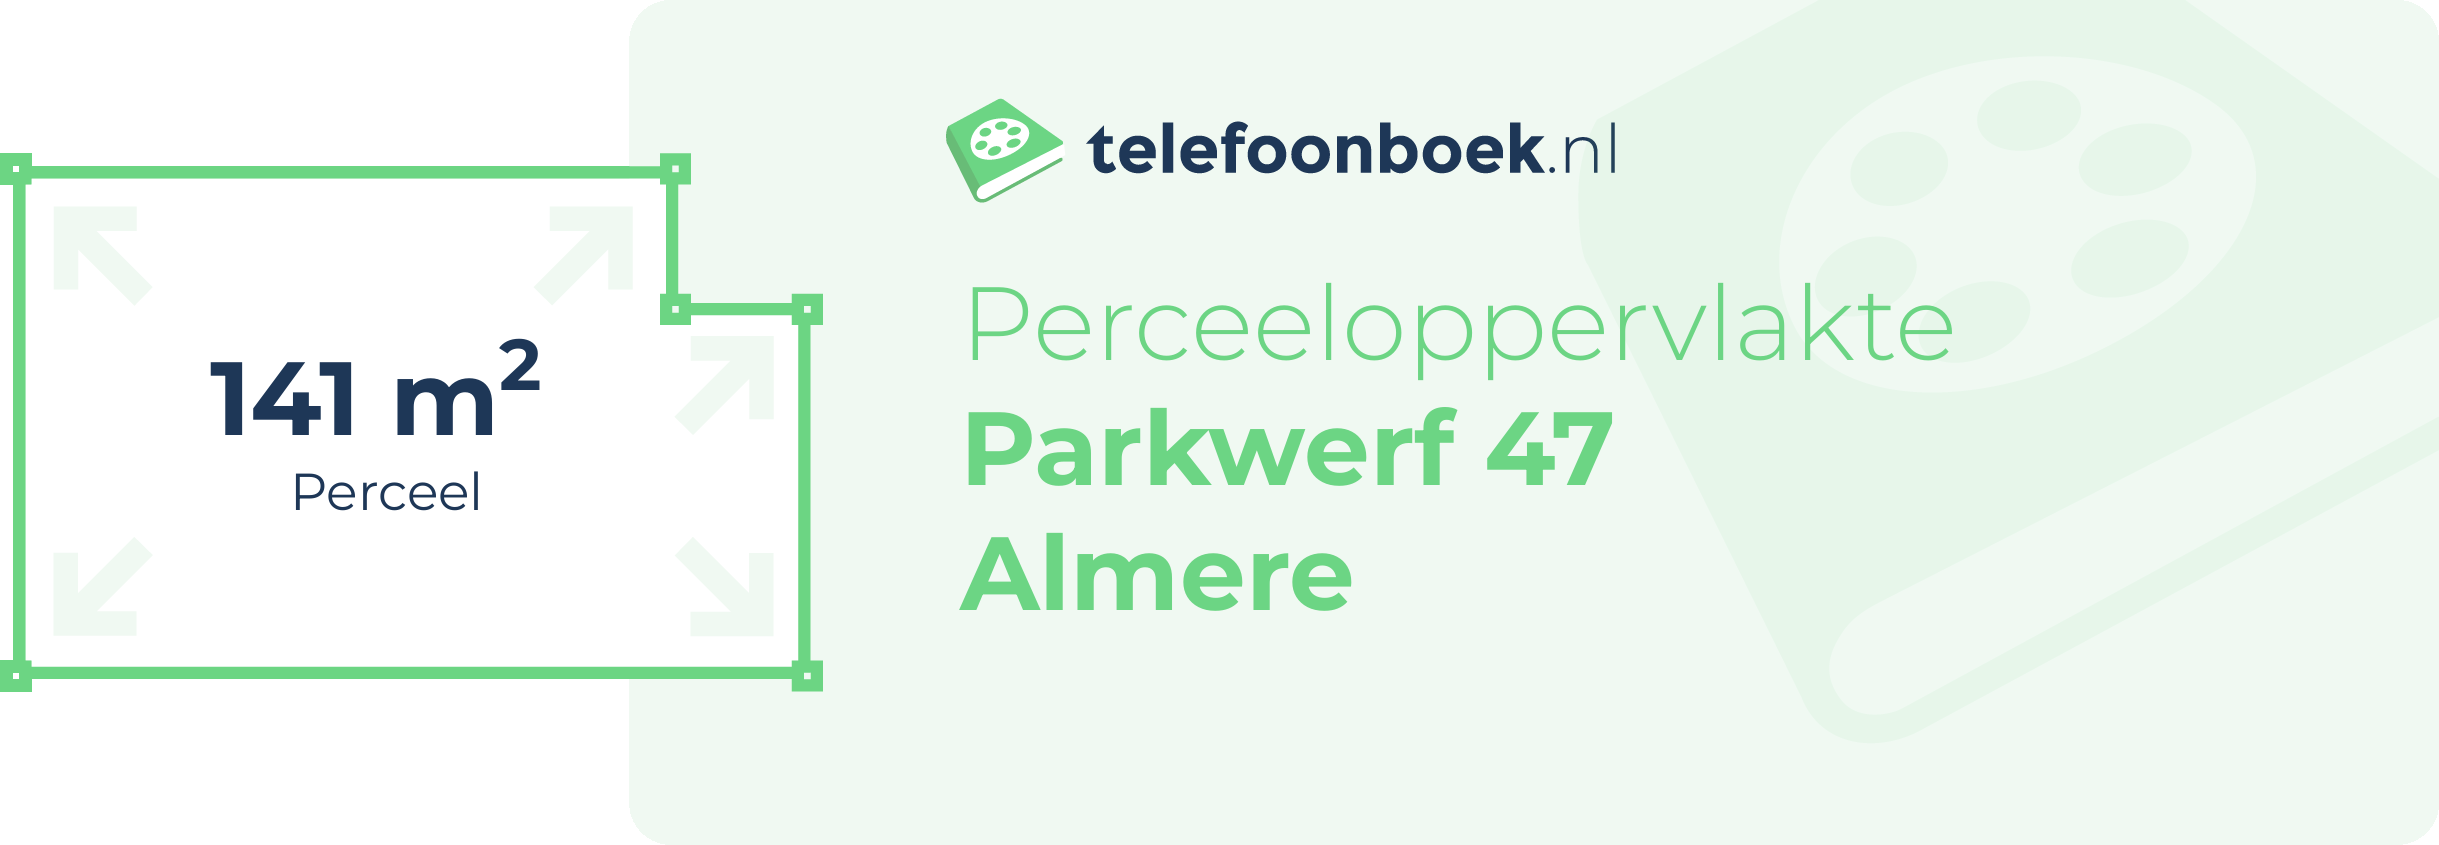 Perceeloppervlakte Parkwerf 47 Almere